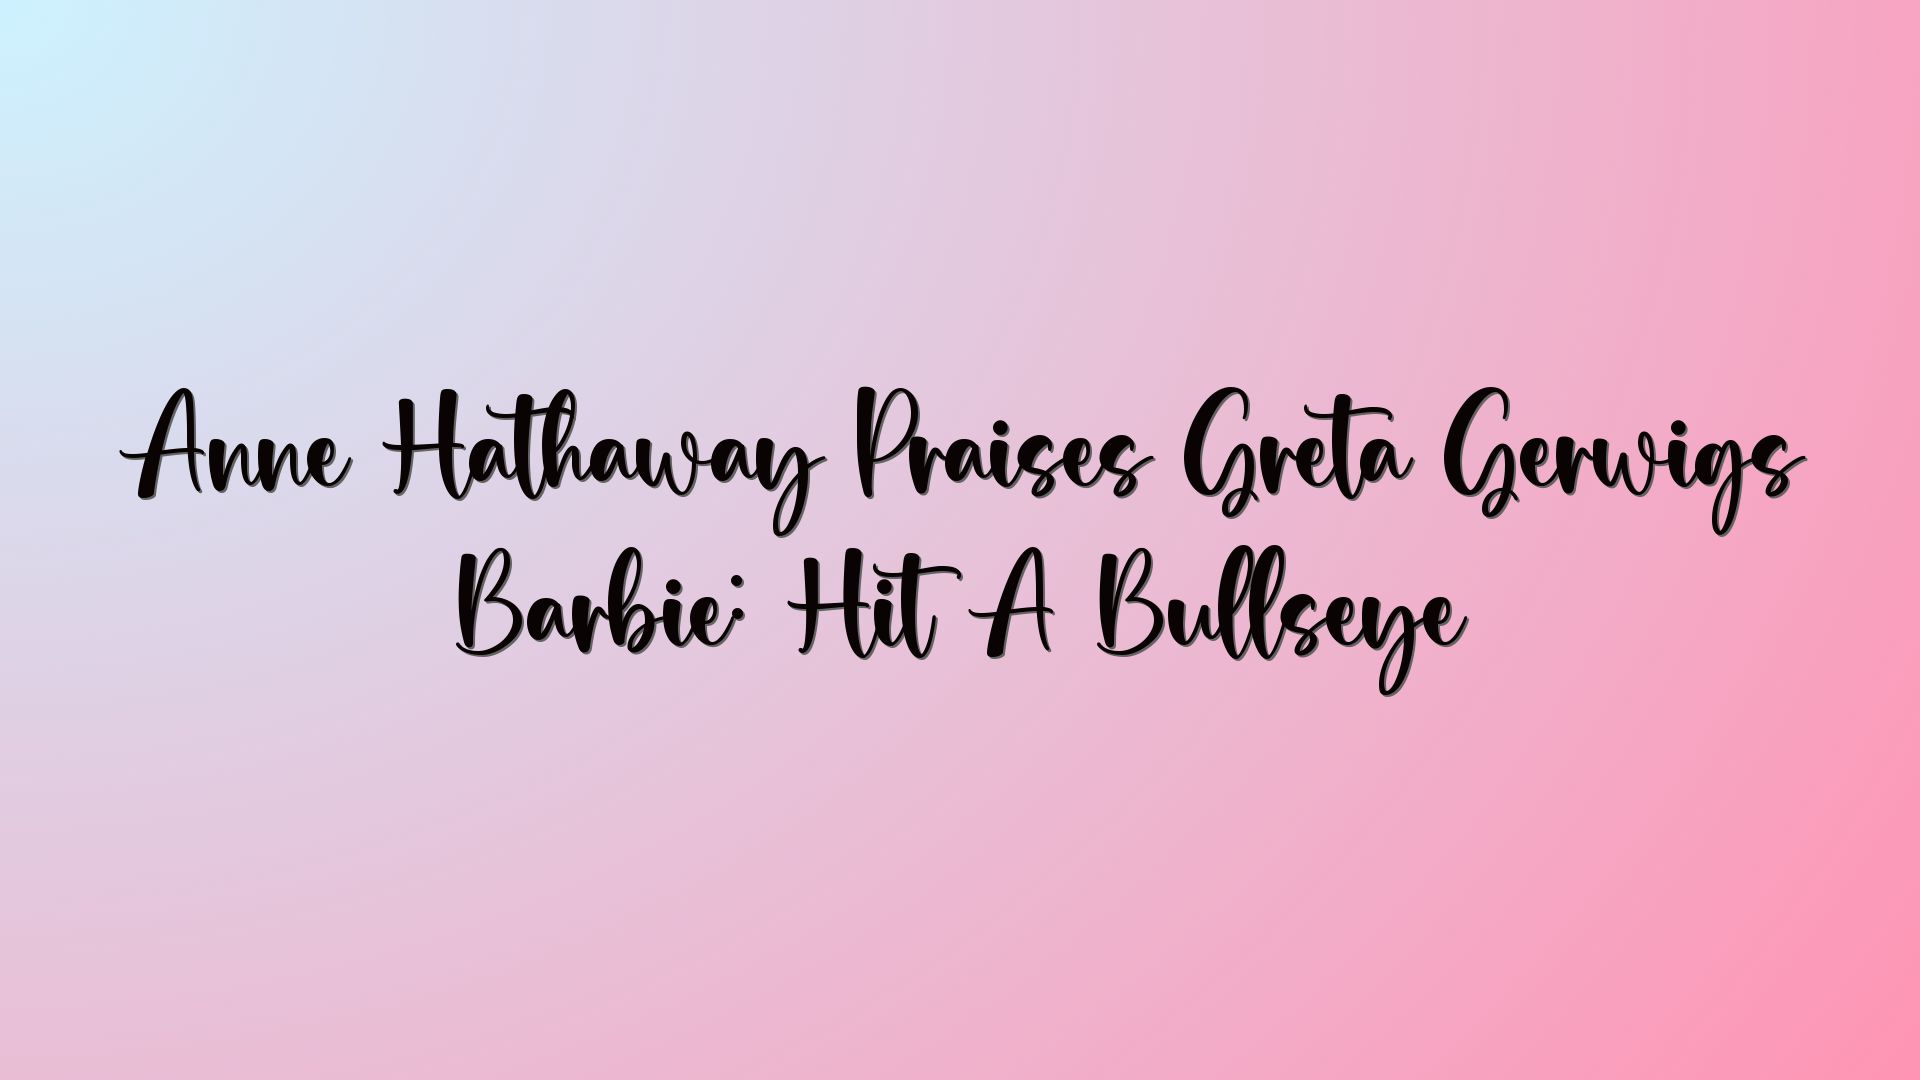 Anne Hathaway Praises Greta Gerwigs Barbie: Hit A Bullseye